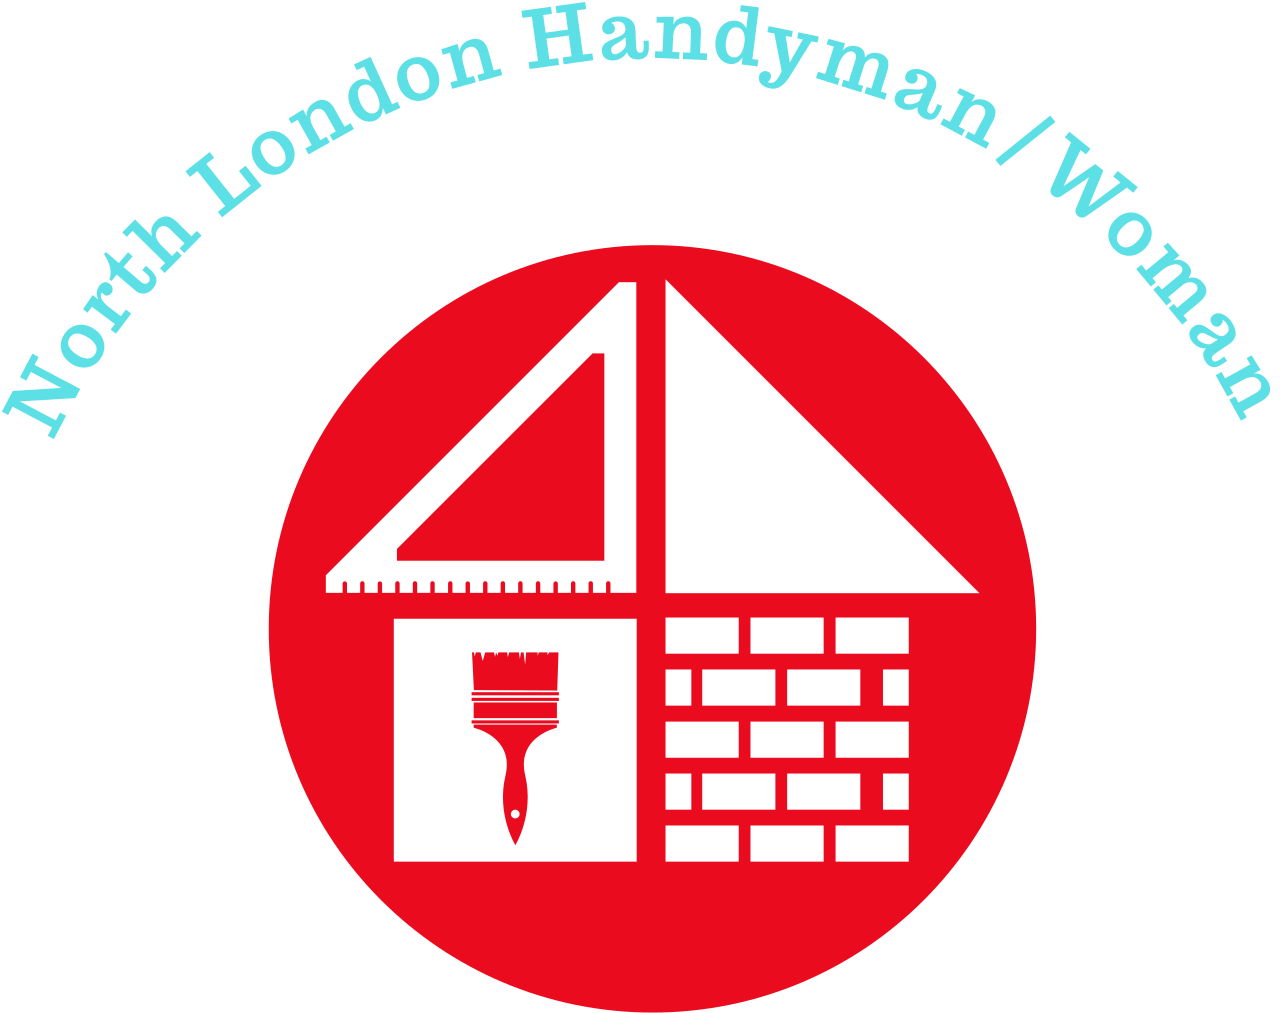 NORTH LONDON HANDYMAN/WOMAN's web page